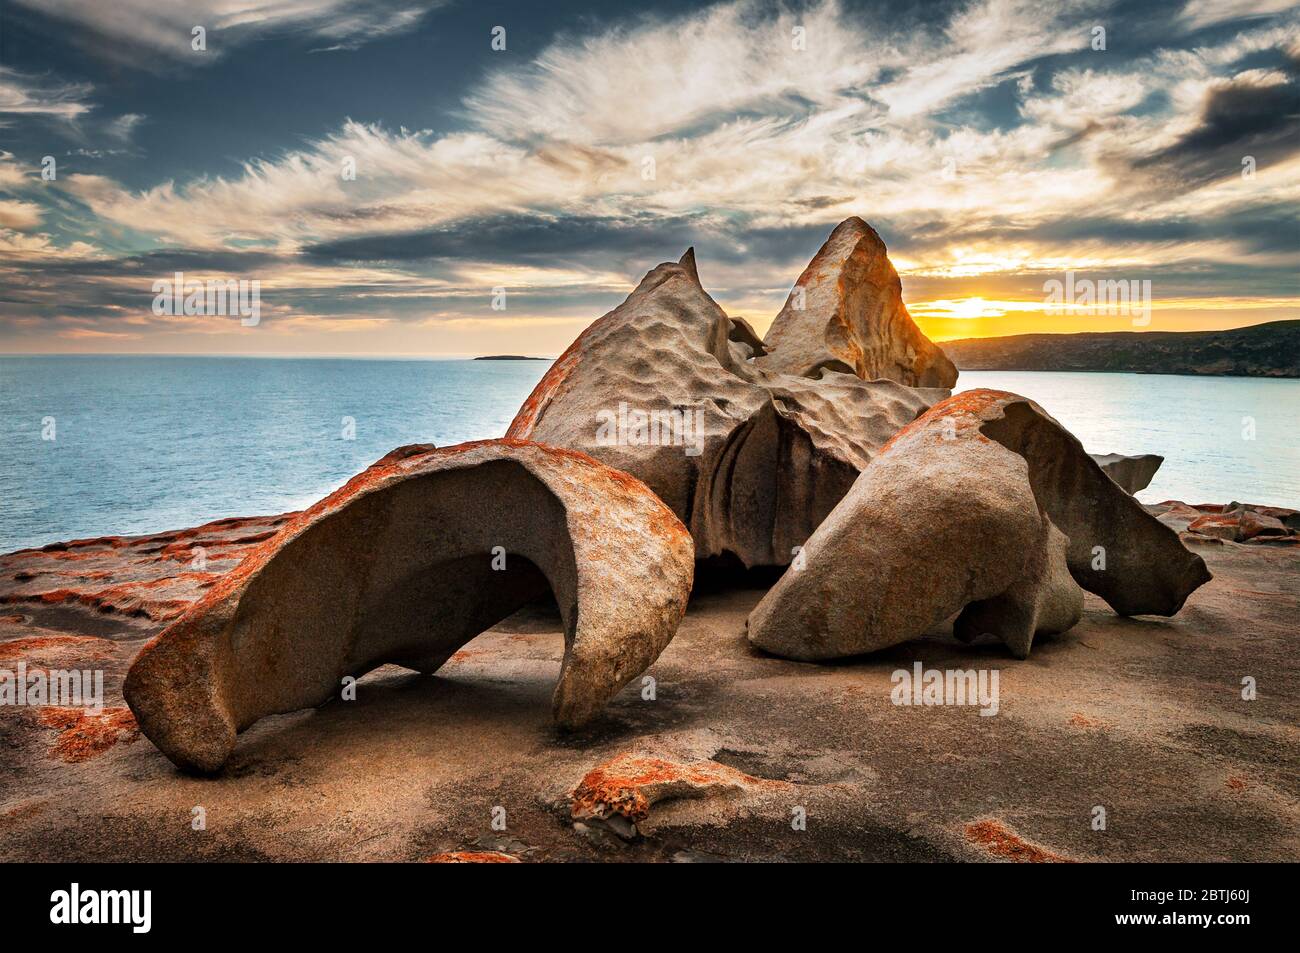 Incredibili rocce notevoli sull'isola di Kangaroo. Foto Stock